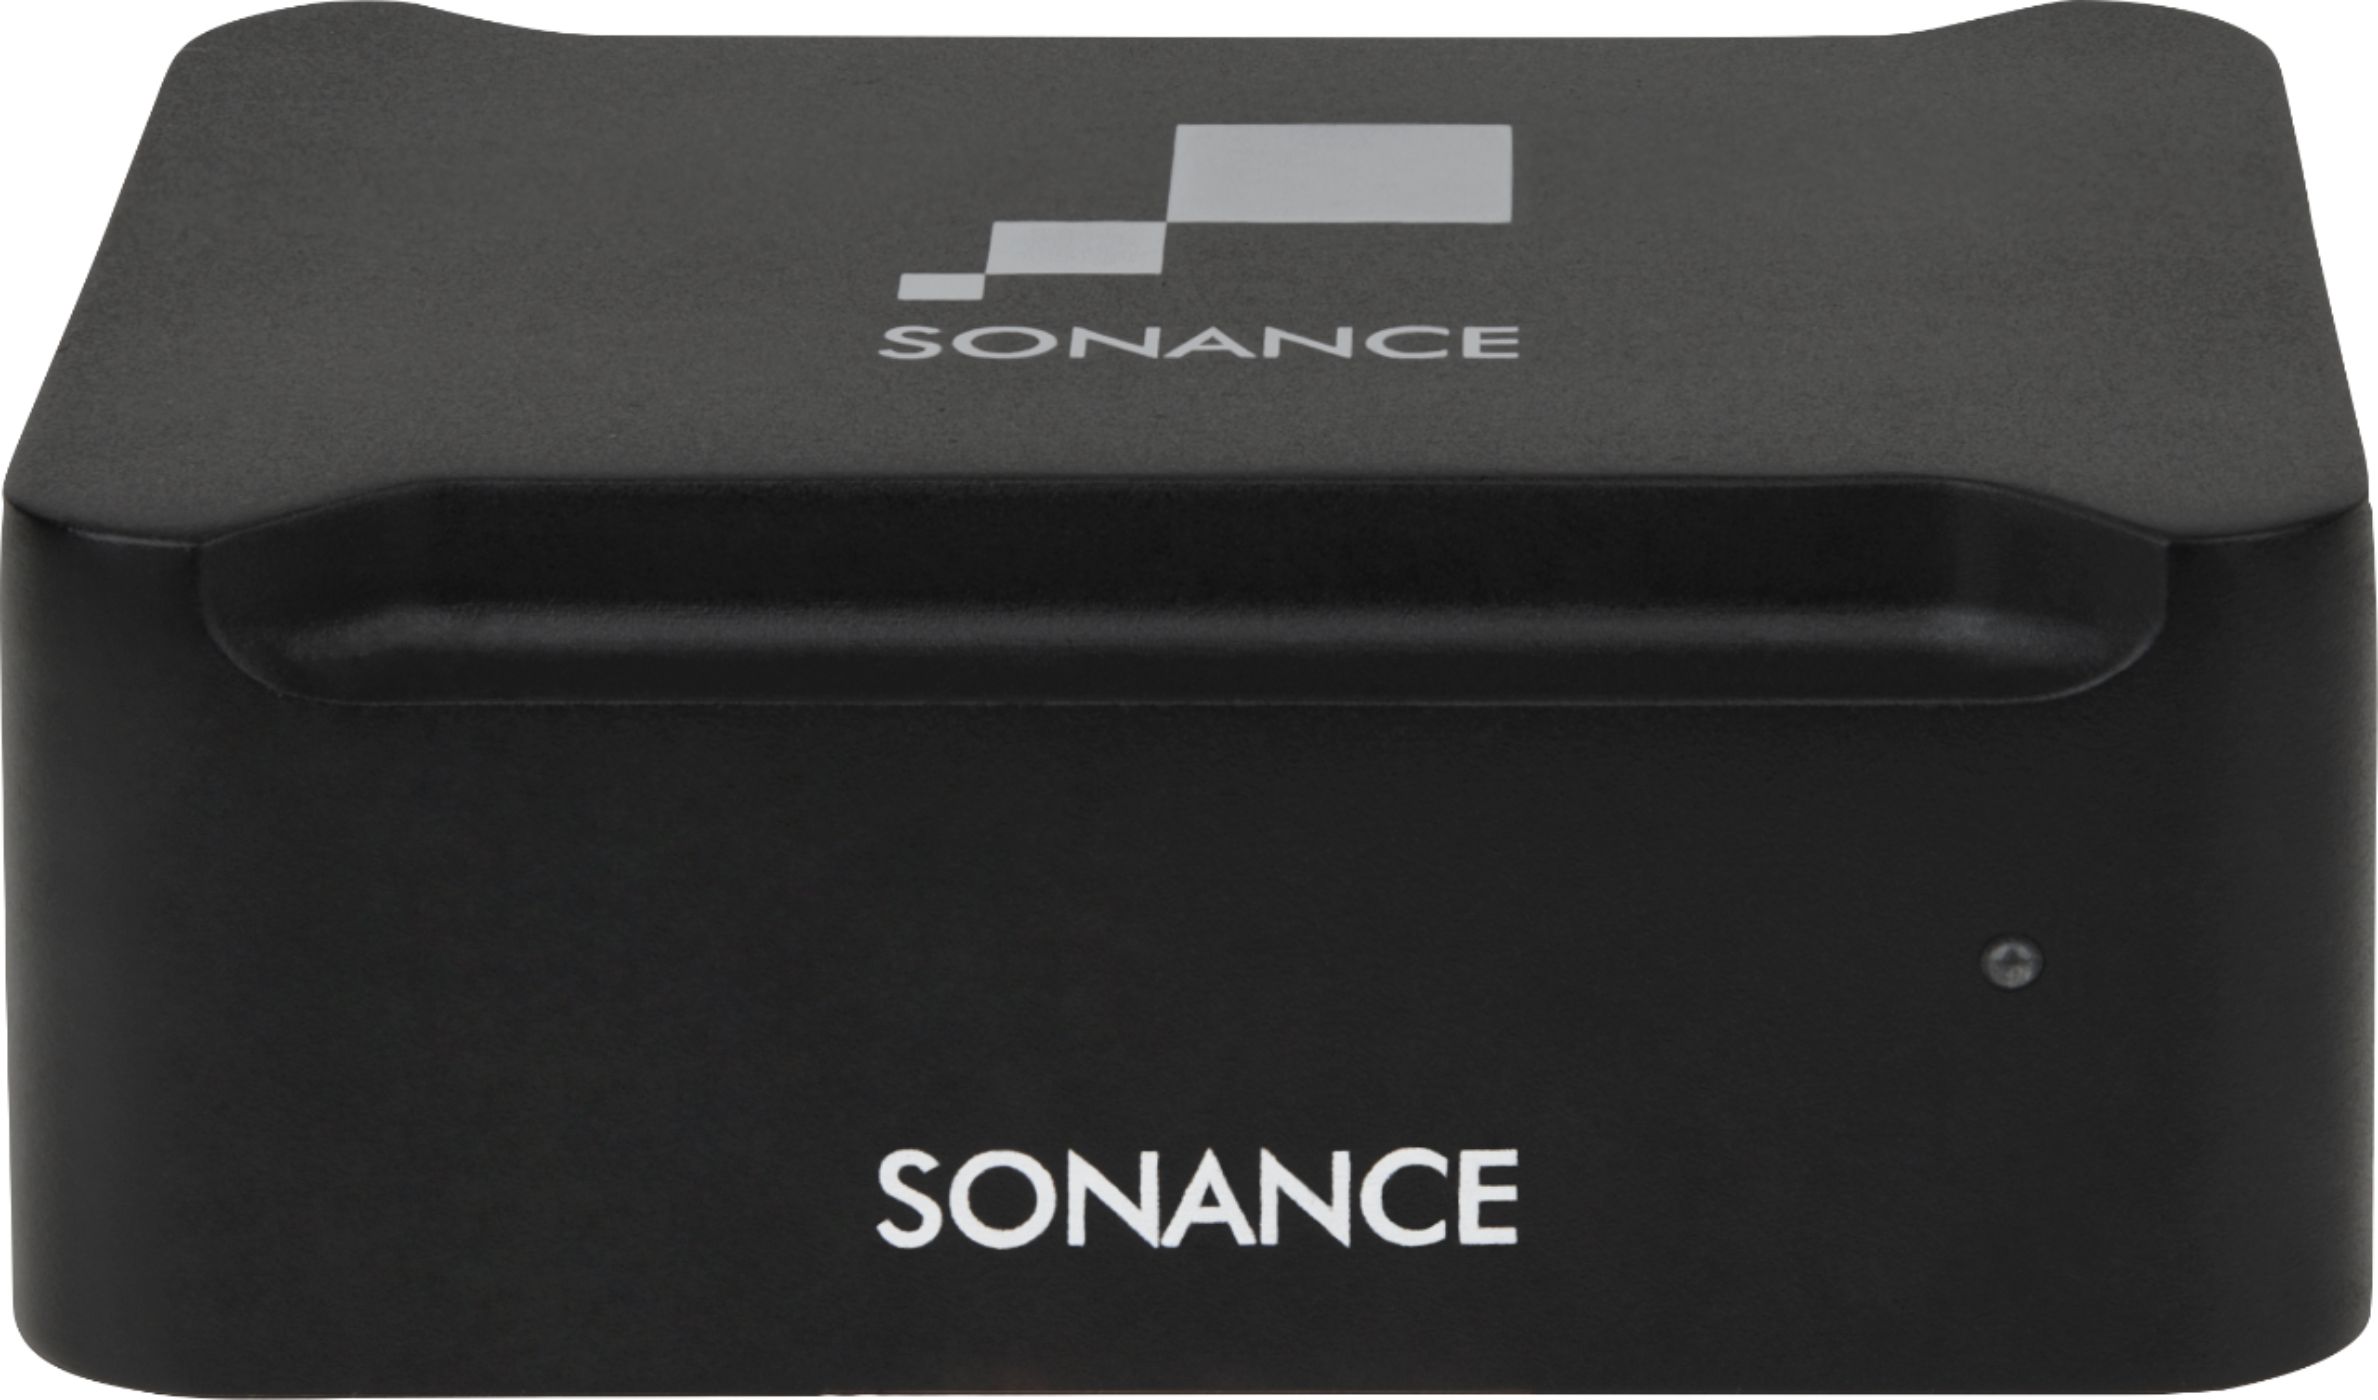 Sonance - Wireless Transmitter and Receiver Kit - Black